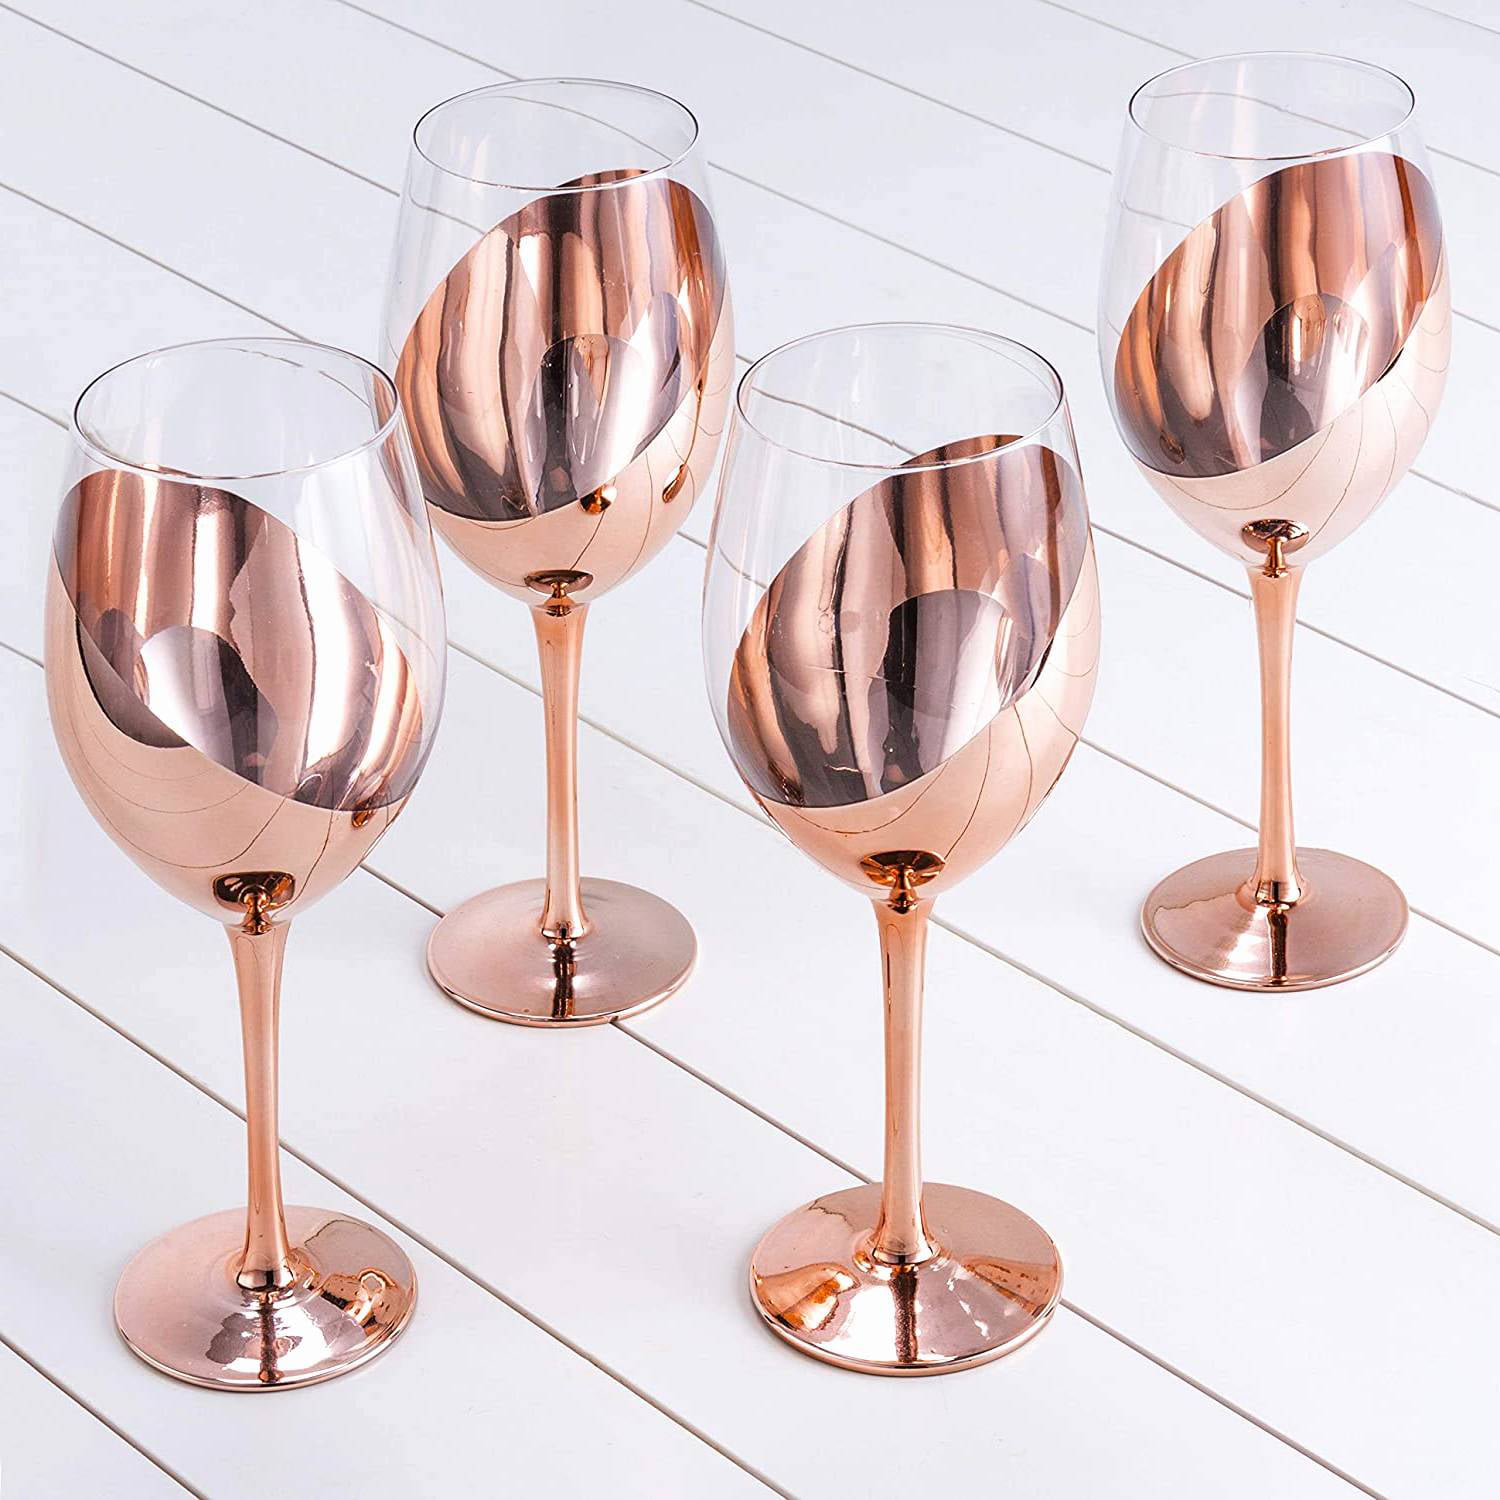 MyGift 9 oz Champagne Flute Ombre Rose Gold Stemware Glasses Set of 4 